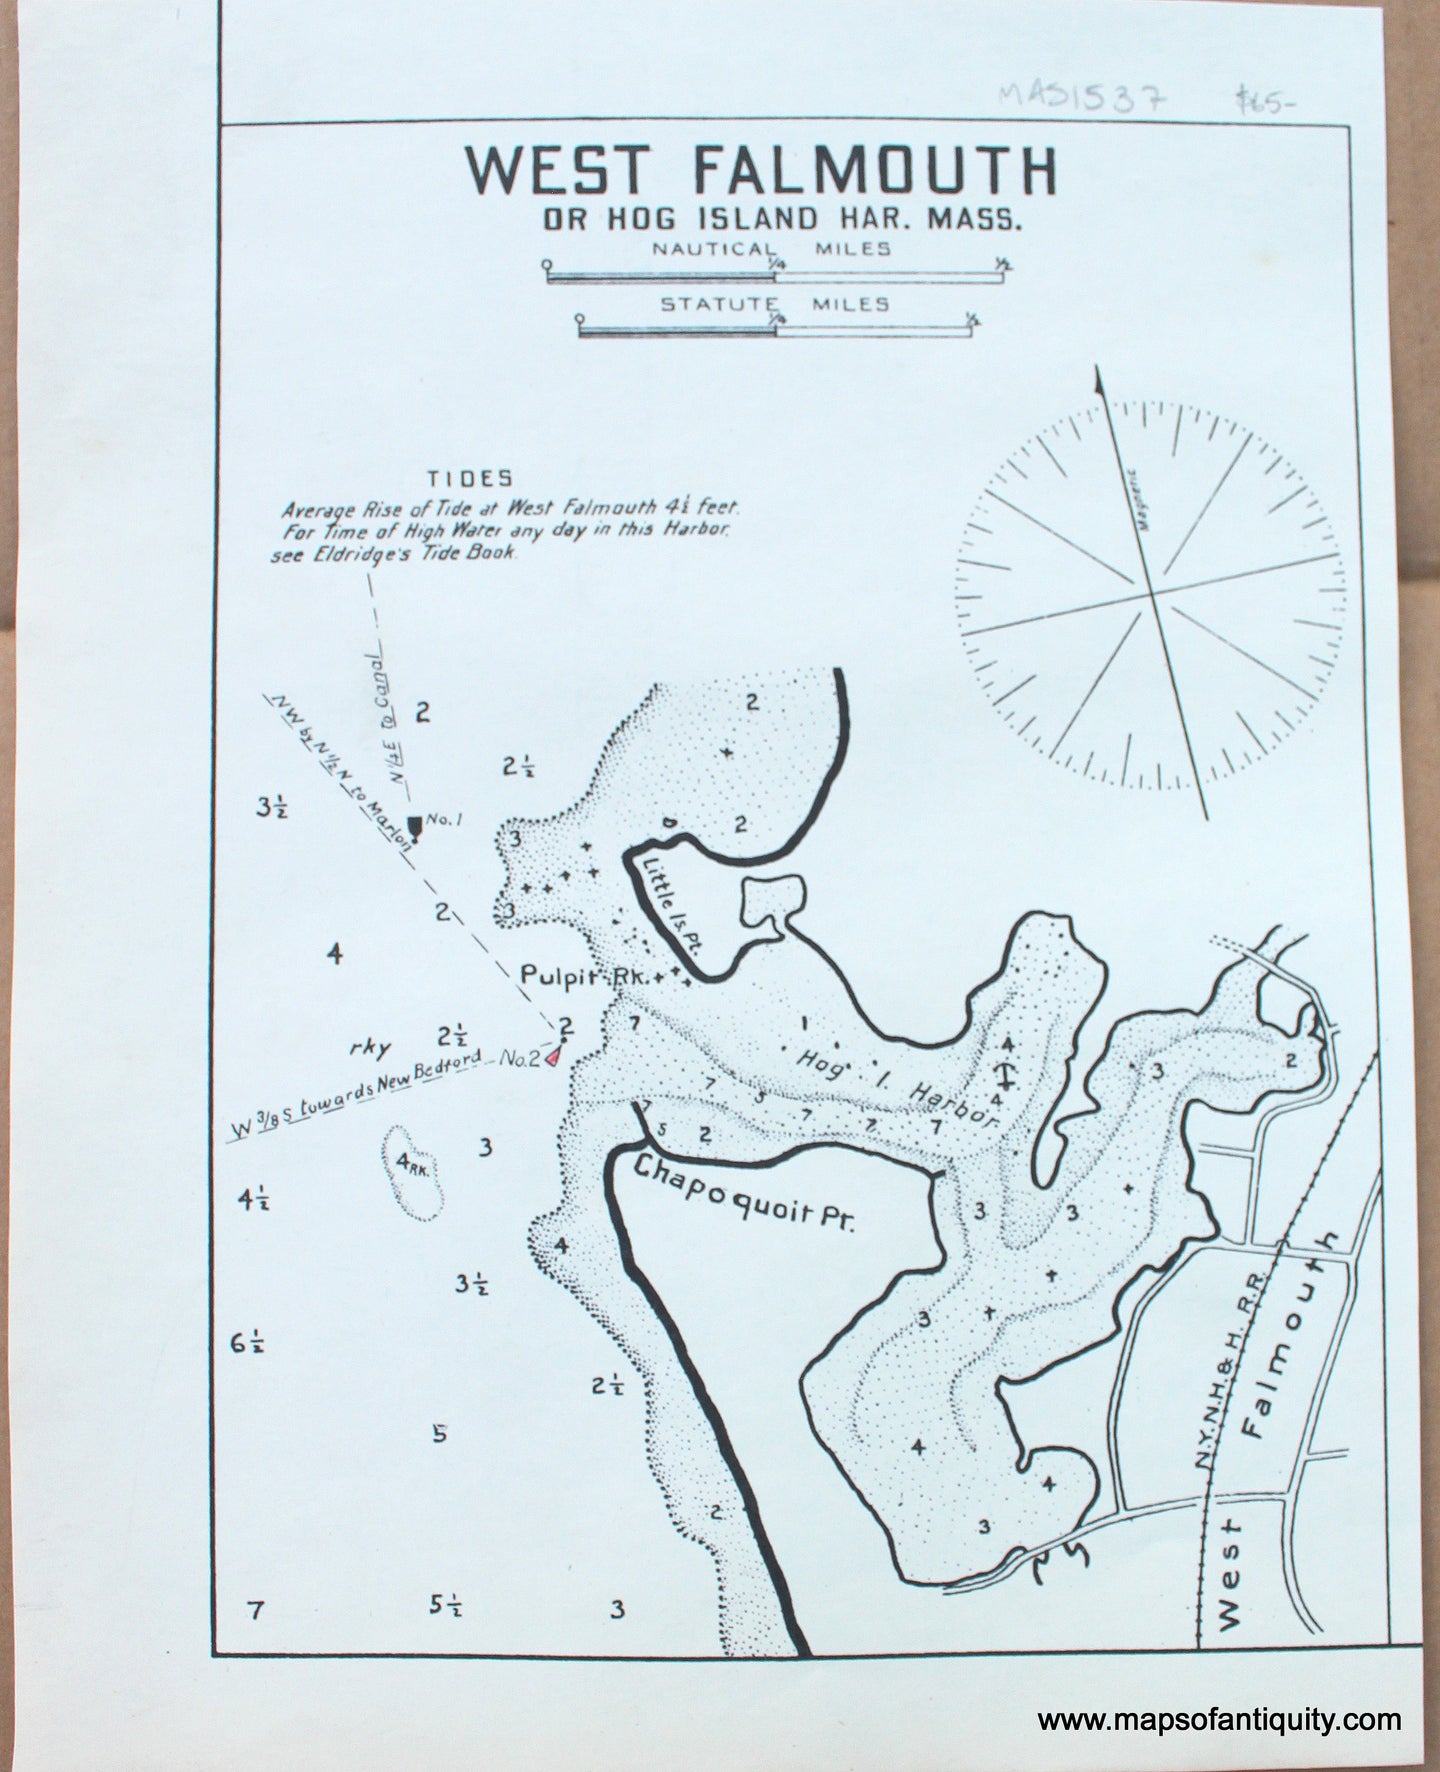 1910 - West Falmouth or Hog Island Harbor, Mass. - Antique Chart